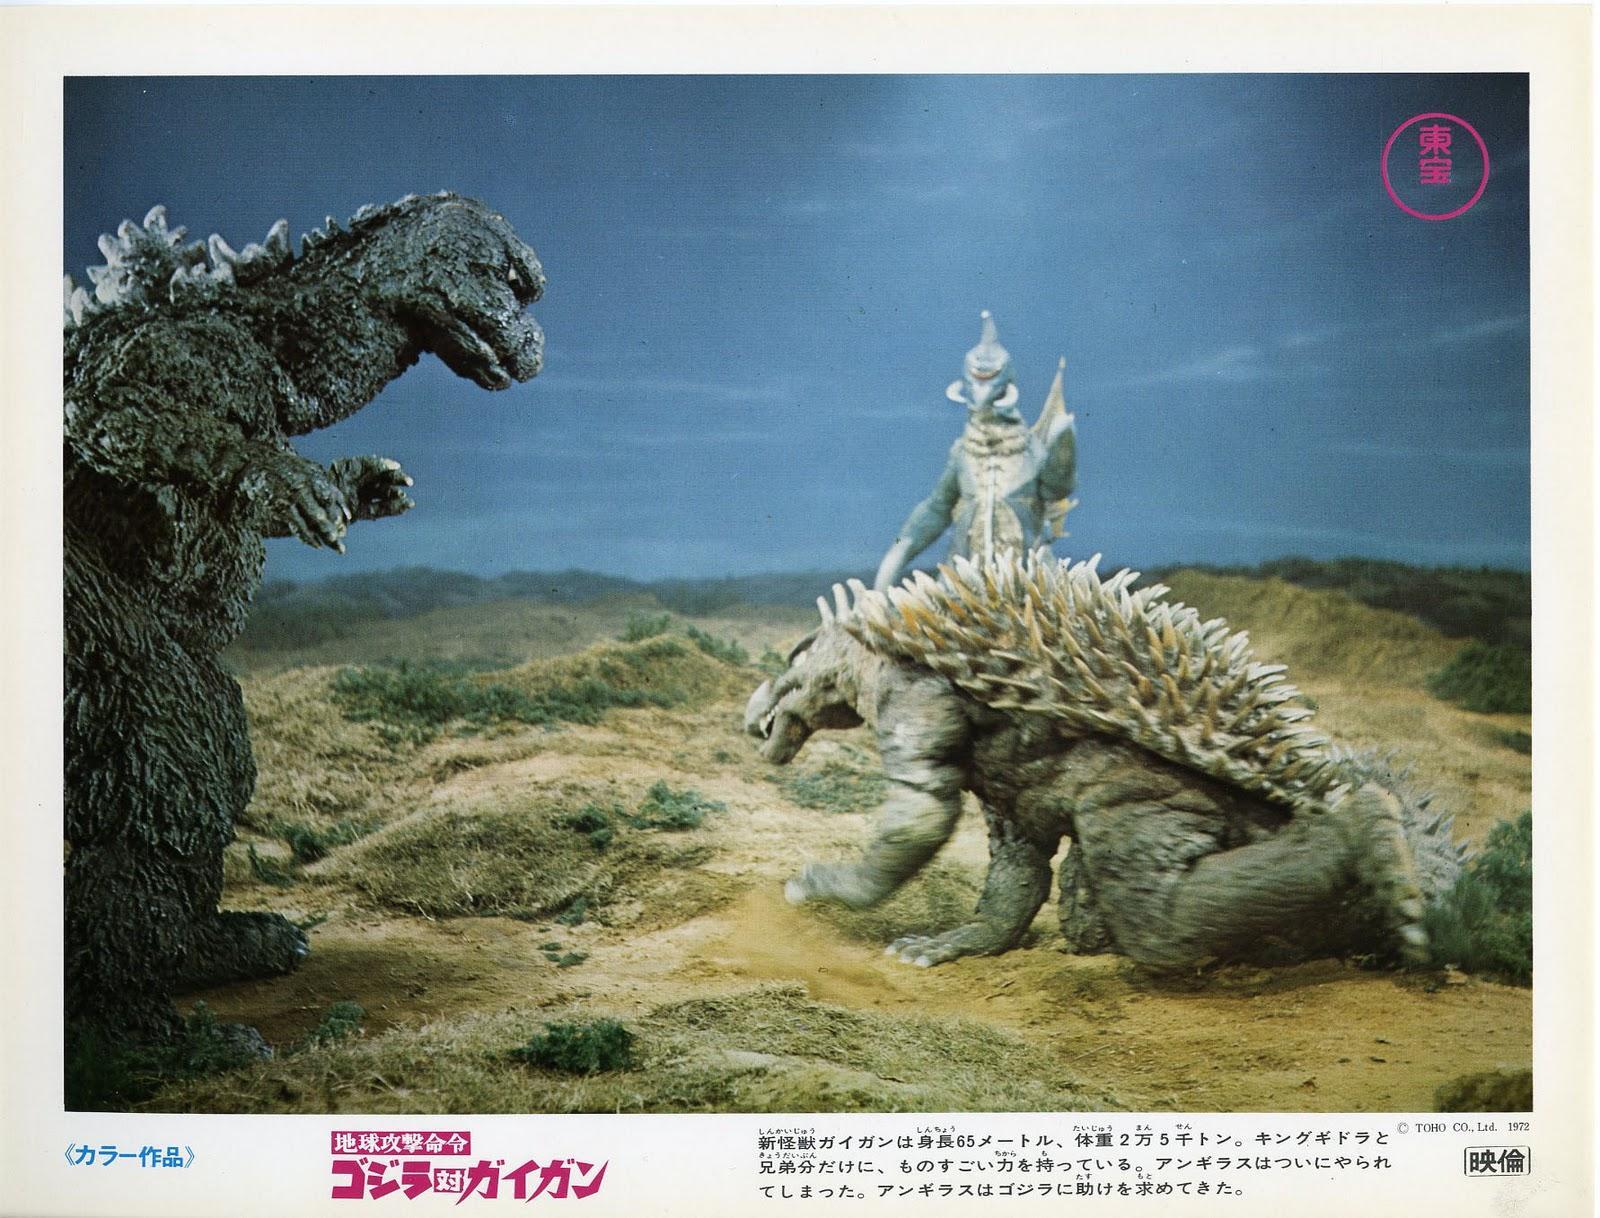 Godzilla Vs. Gigan Wallpaper HD Download